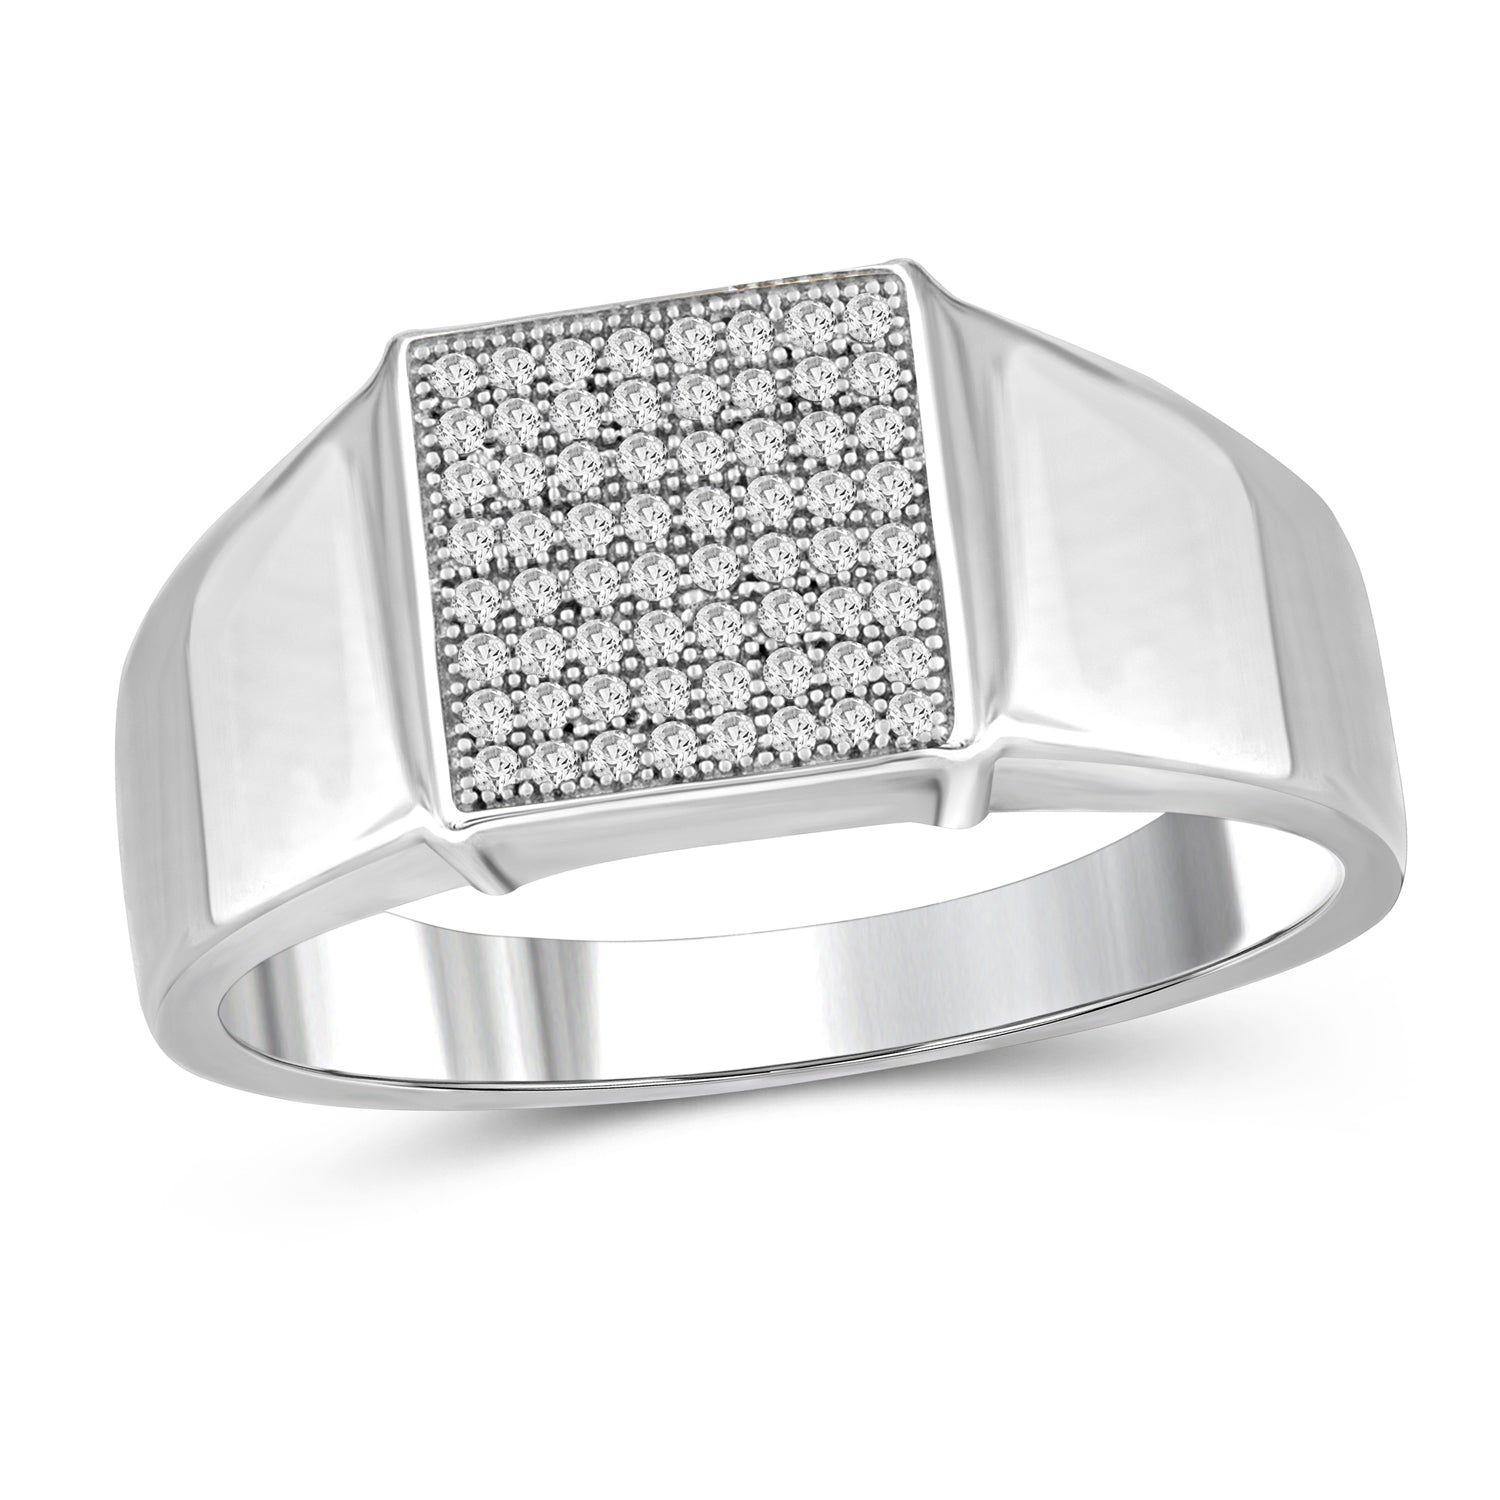 Jewelnova Men's 1/4 Carat T.W. White Diamond Ring